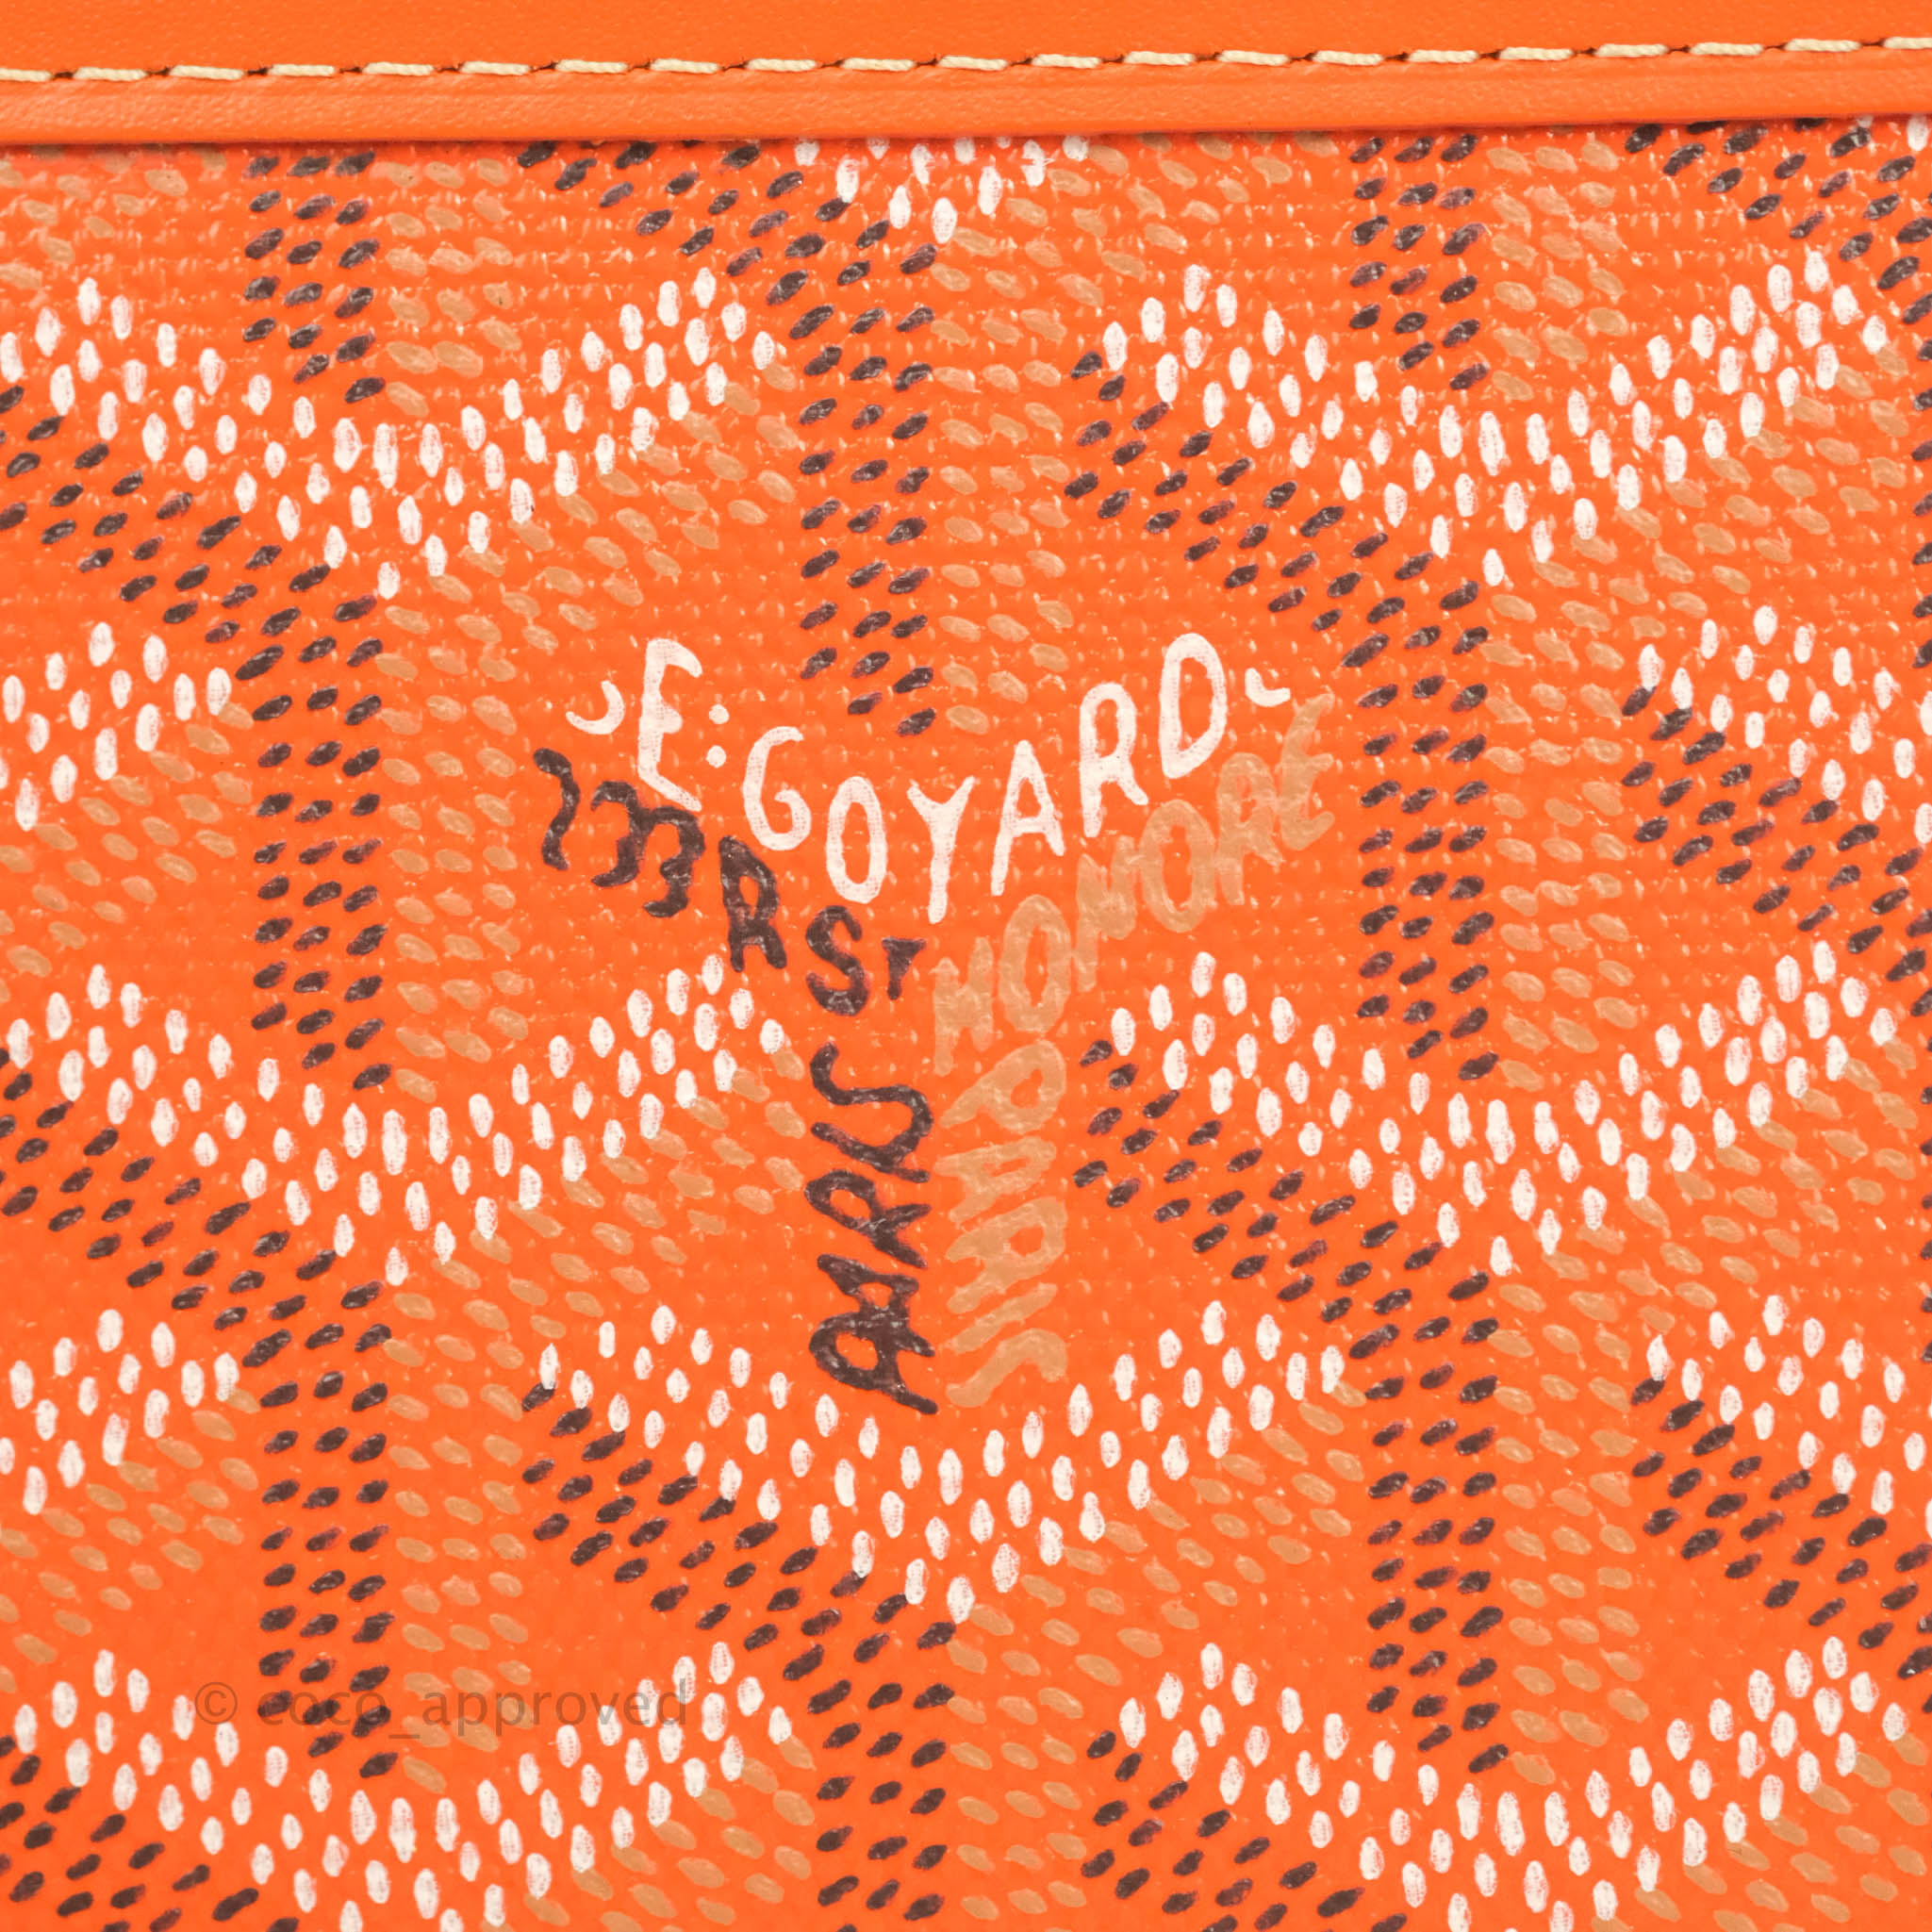 Goyard Goyardine Matignon PM Wallet Orange – Coco Approved Studio